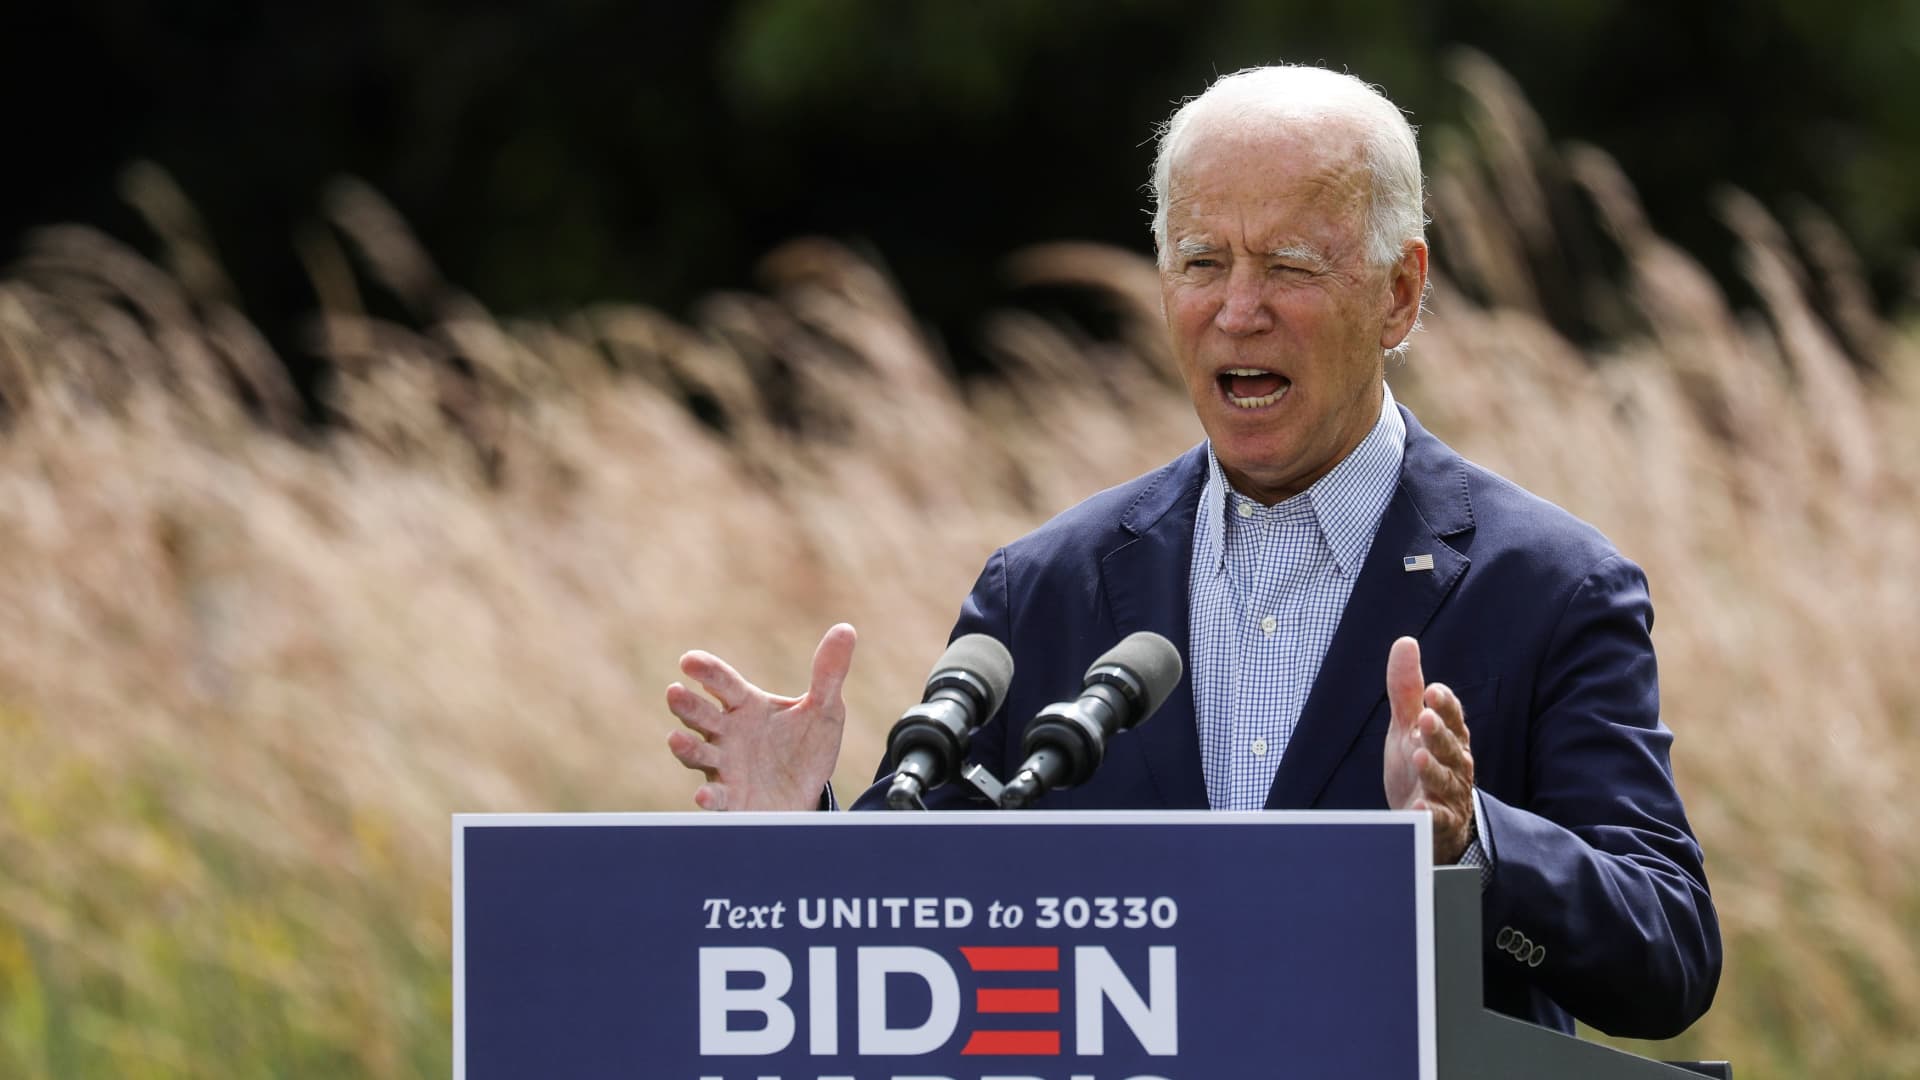 Joe Biden's climate change agenda faces an uncertain future in the Senate